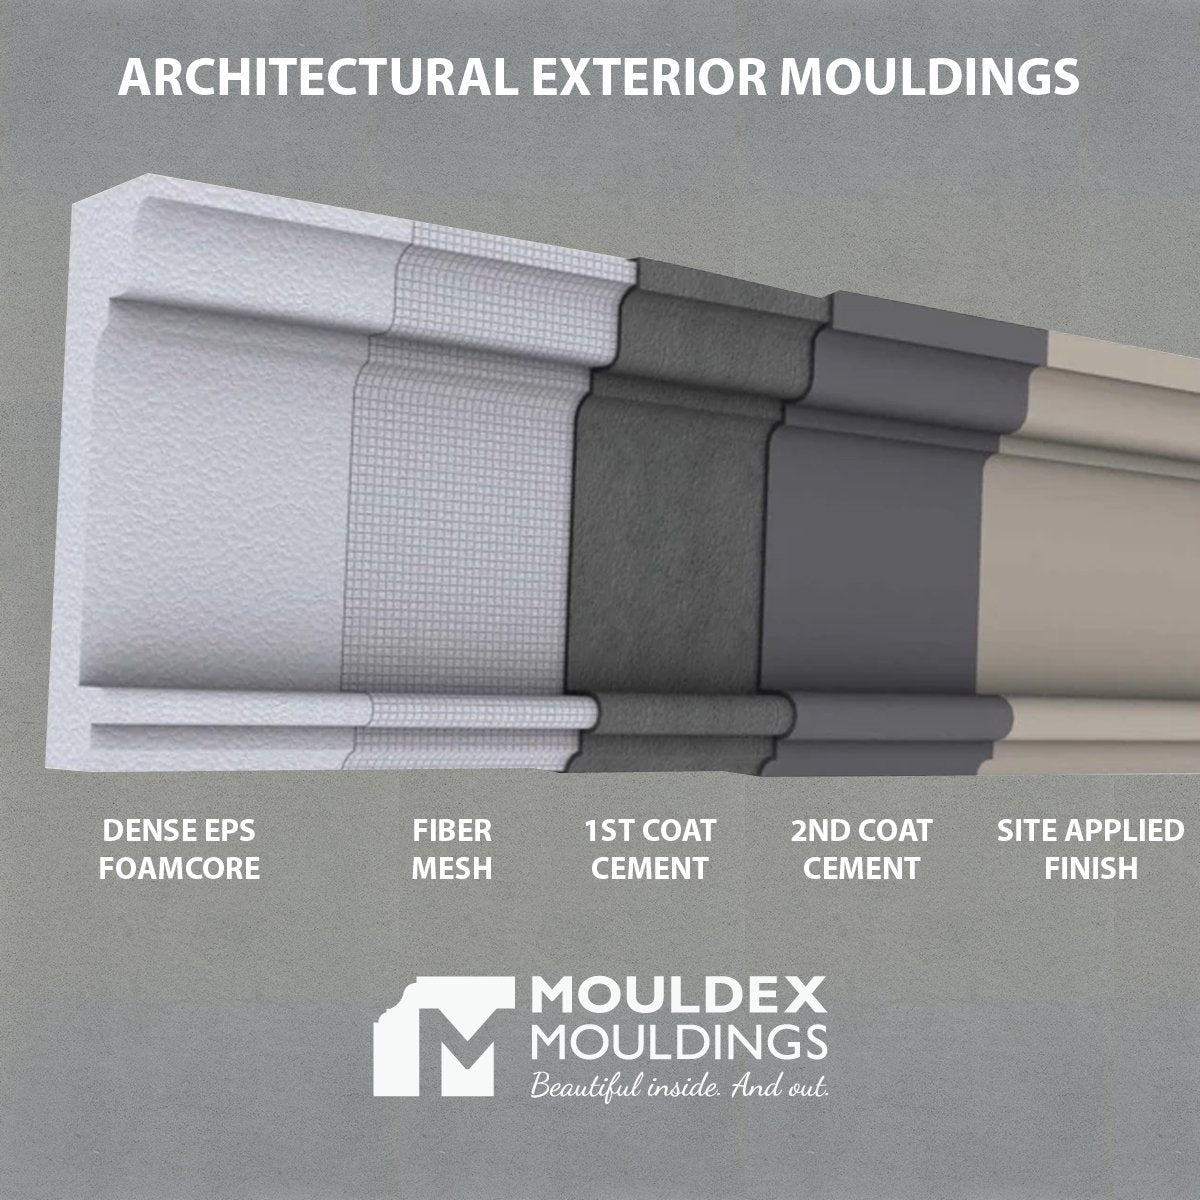 Exterior Composite Architectural Mouldings